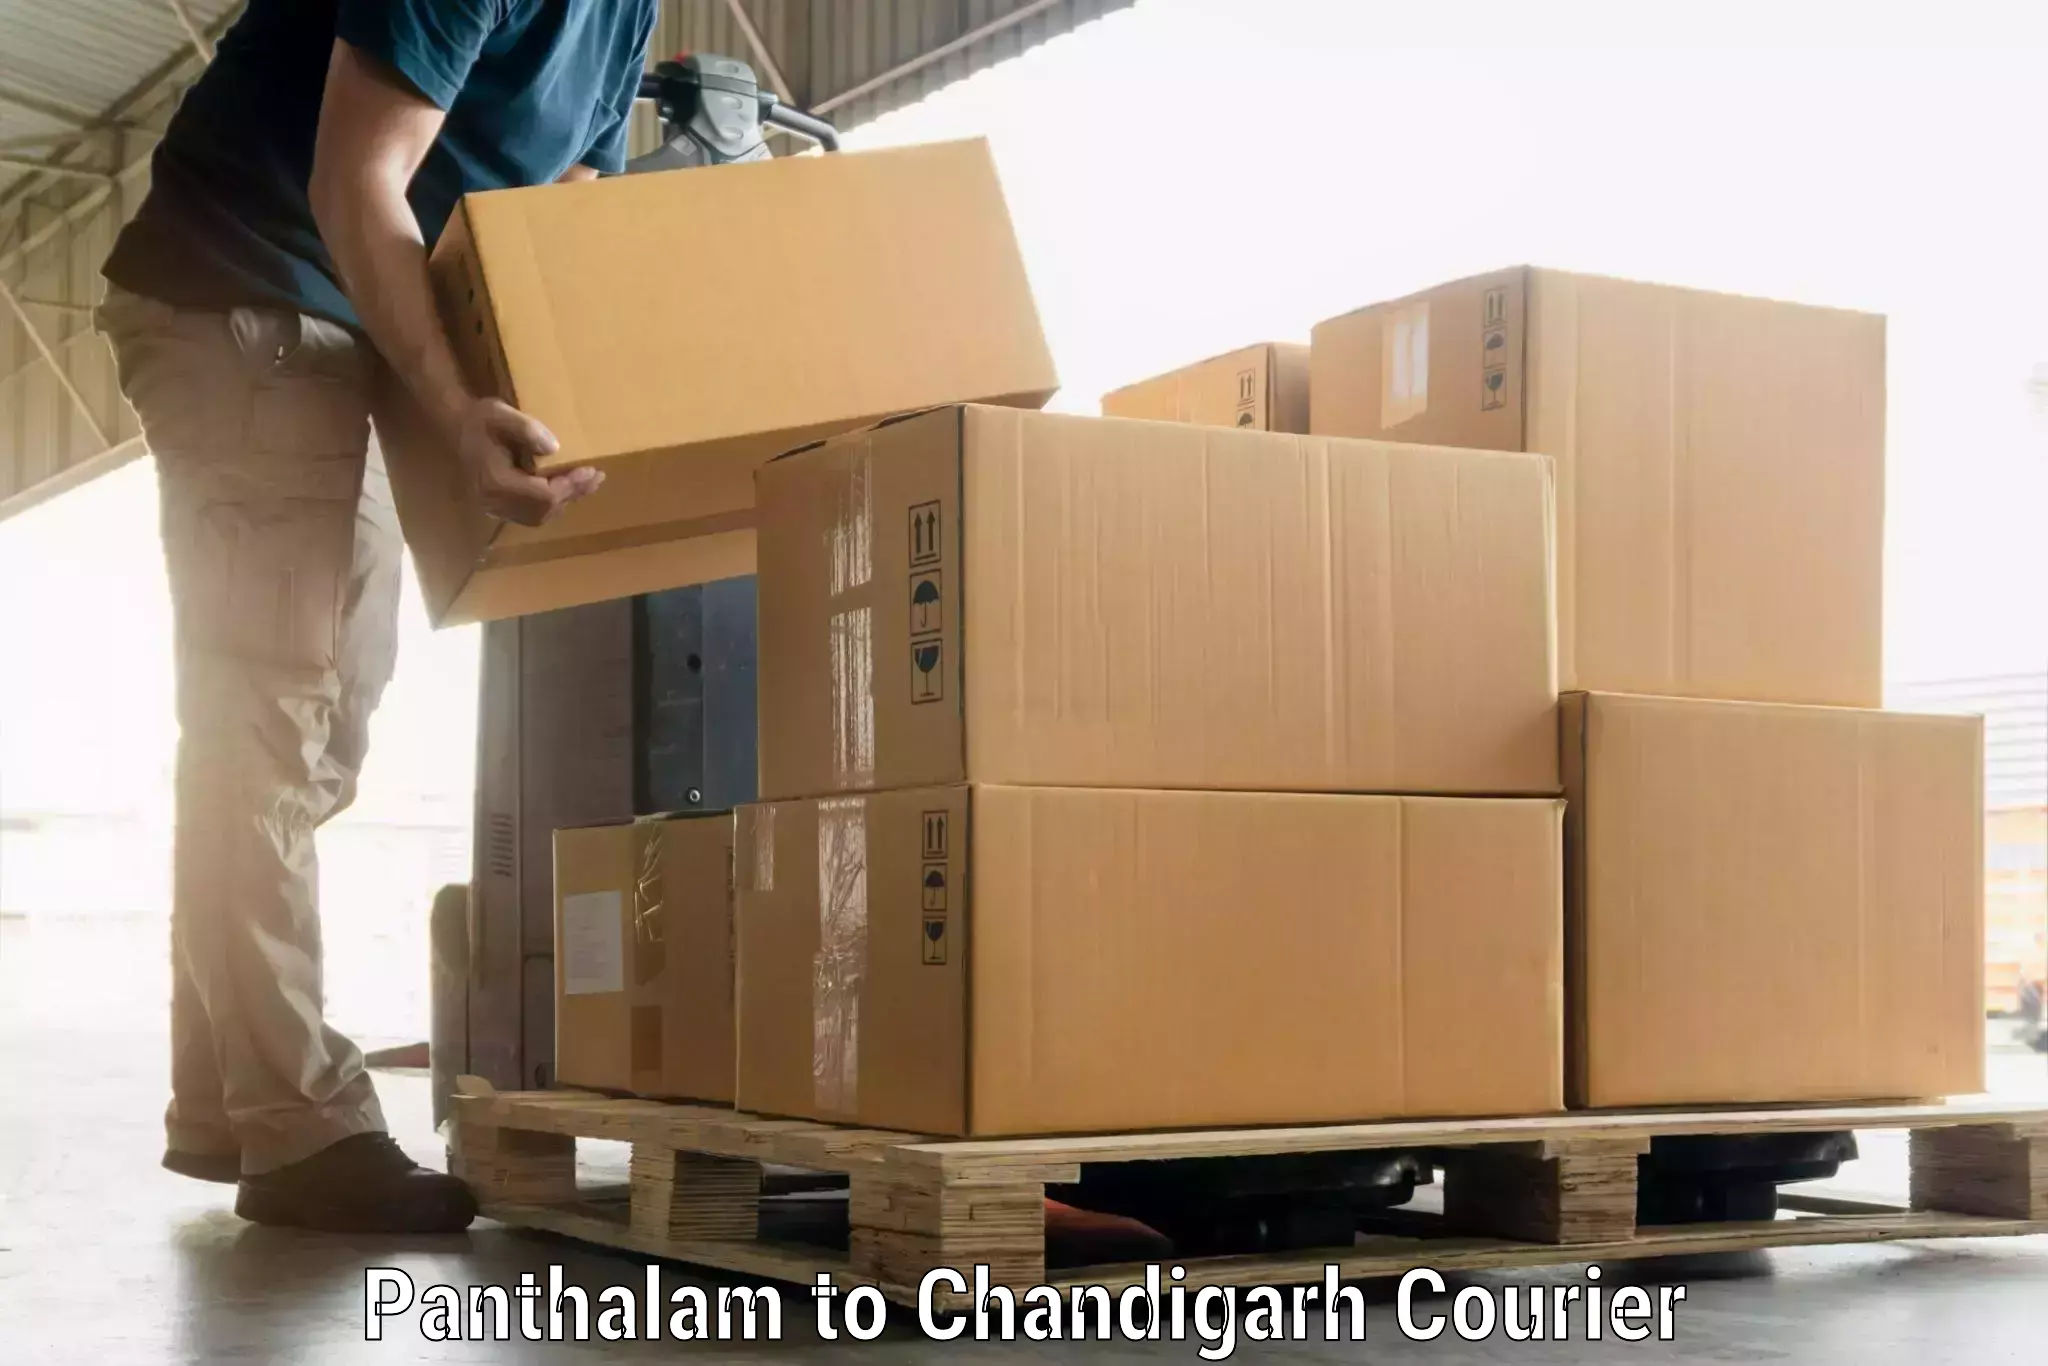 Baggage transport innovation Panthalam to Chandigarh